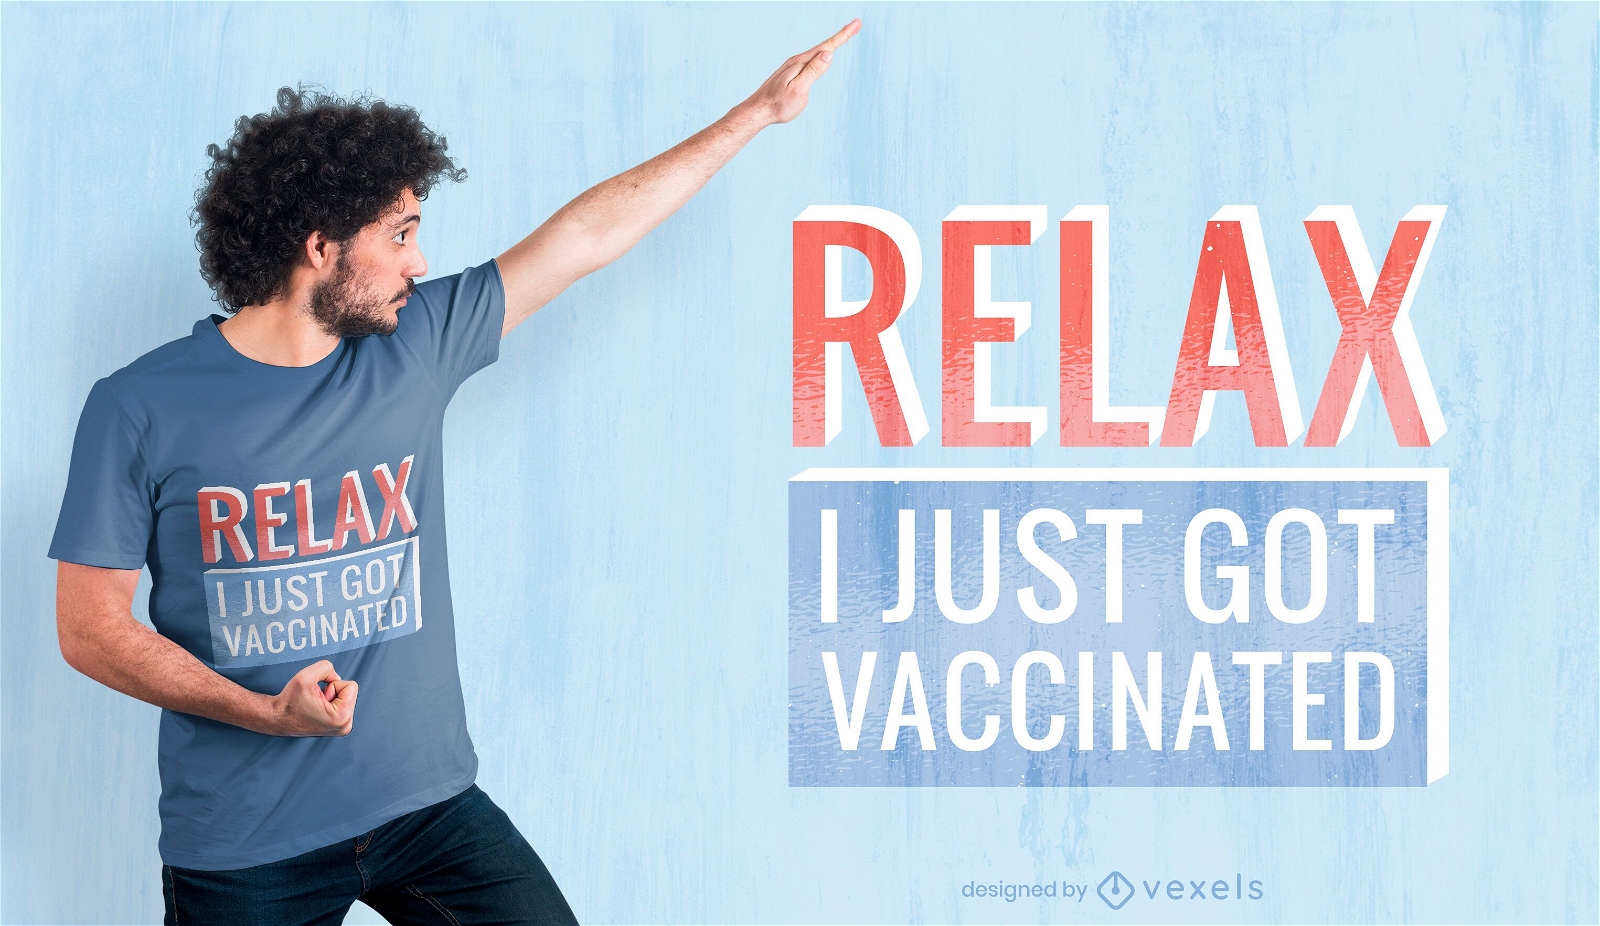 Just got vaccinated t-shirt design